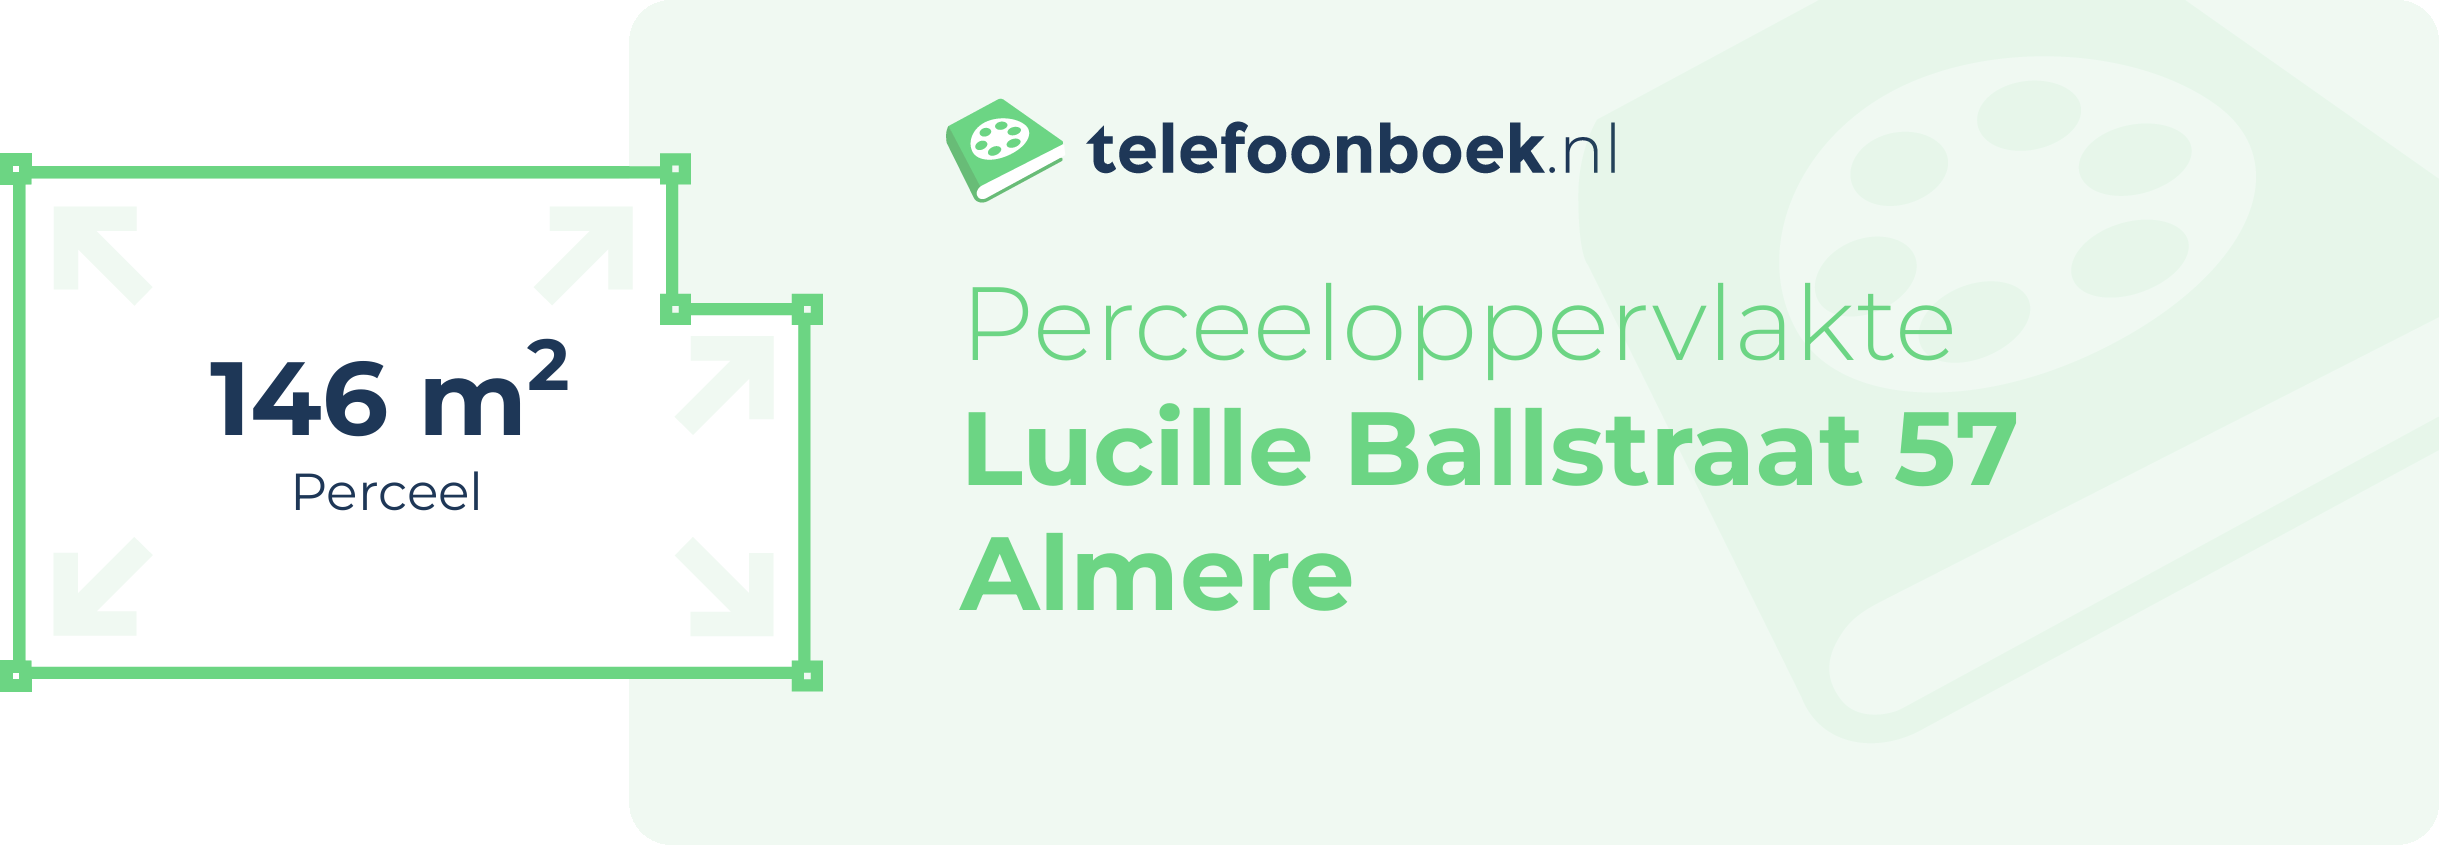 Perceeloppervlakte Lucille Ballstraat 57 Almere